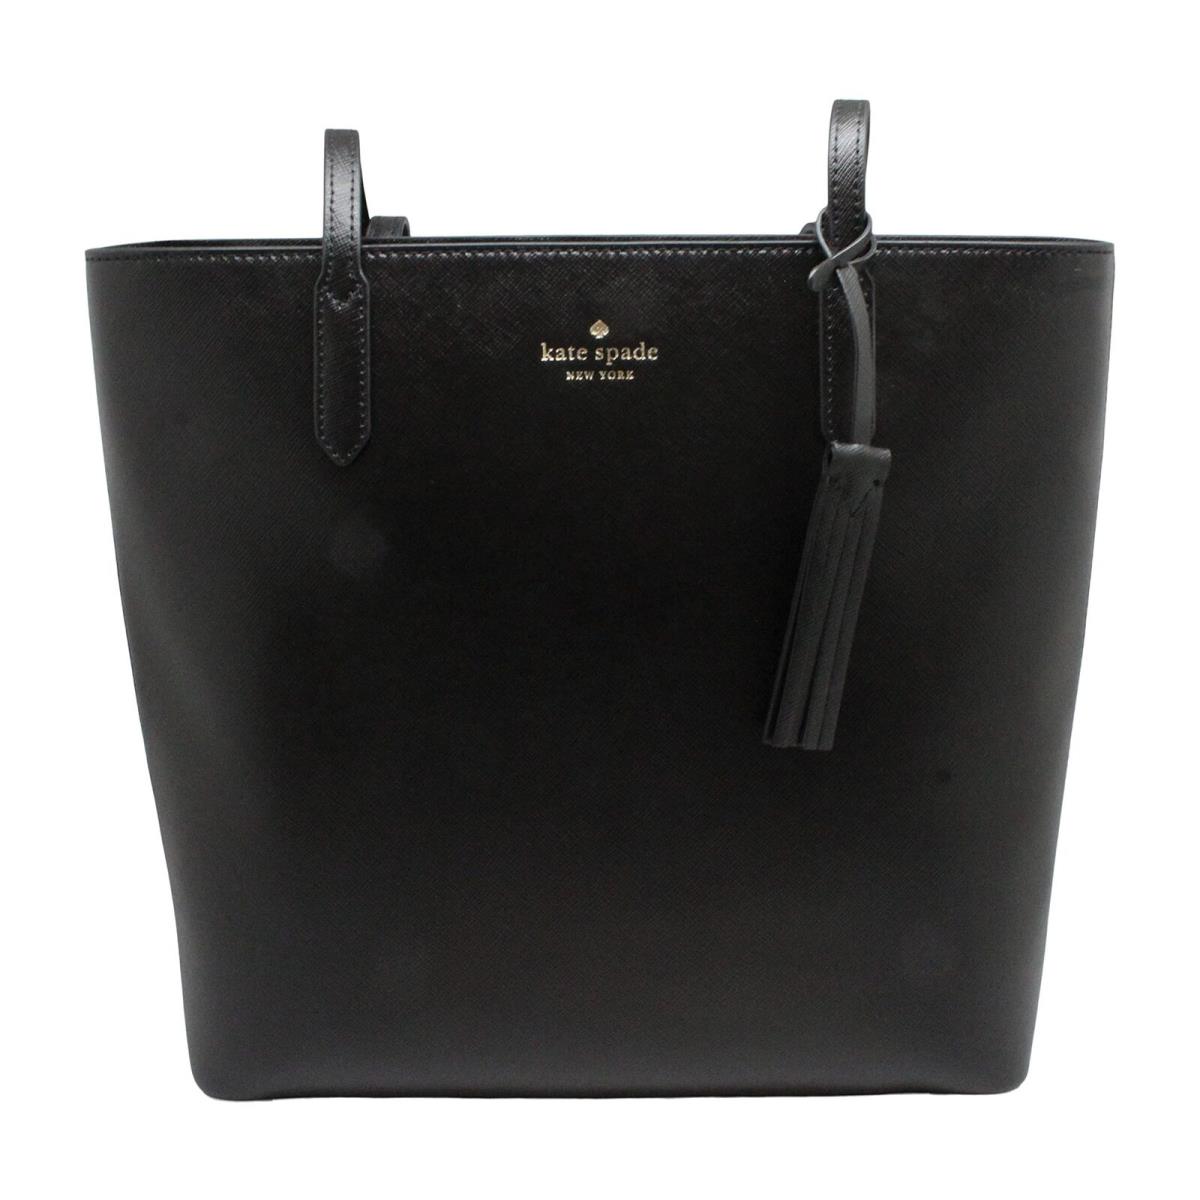 Kate Spade New York Jana Tote in Saffiano Leather Black Handbag Only